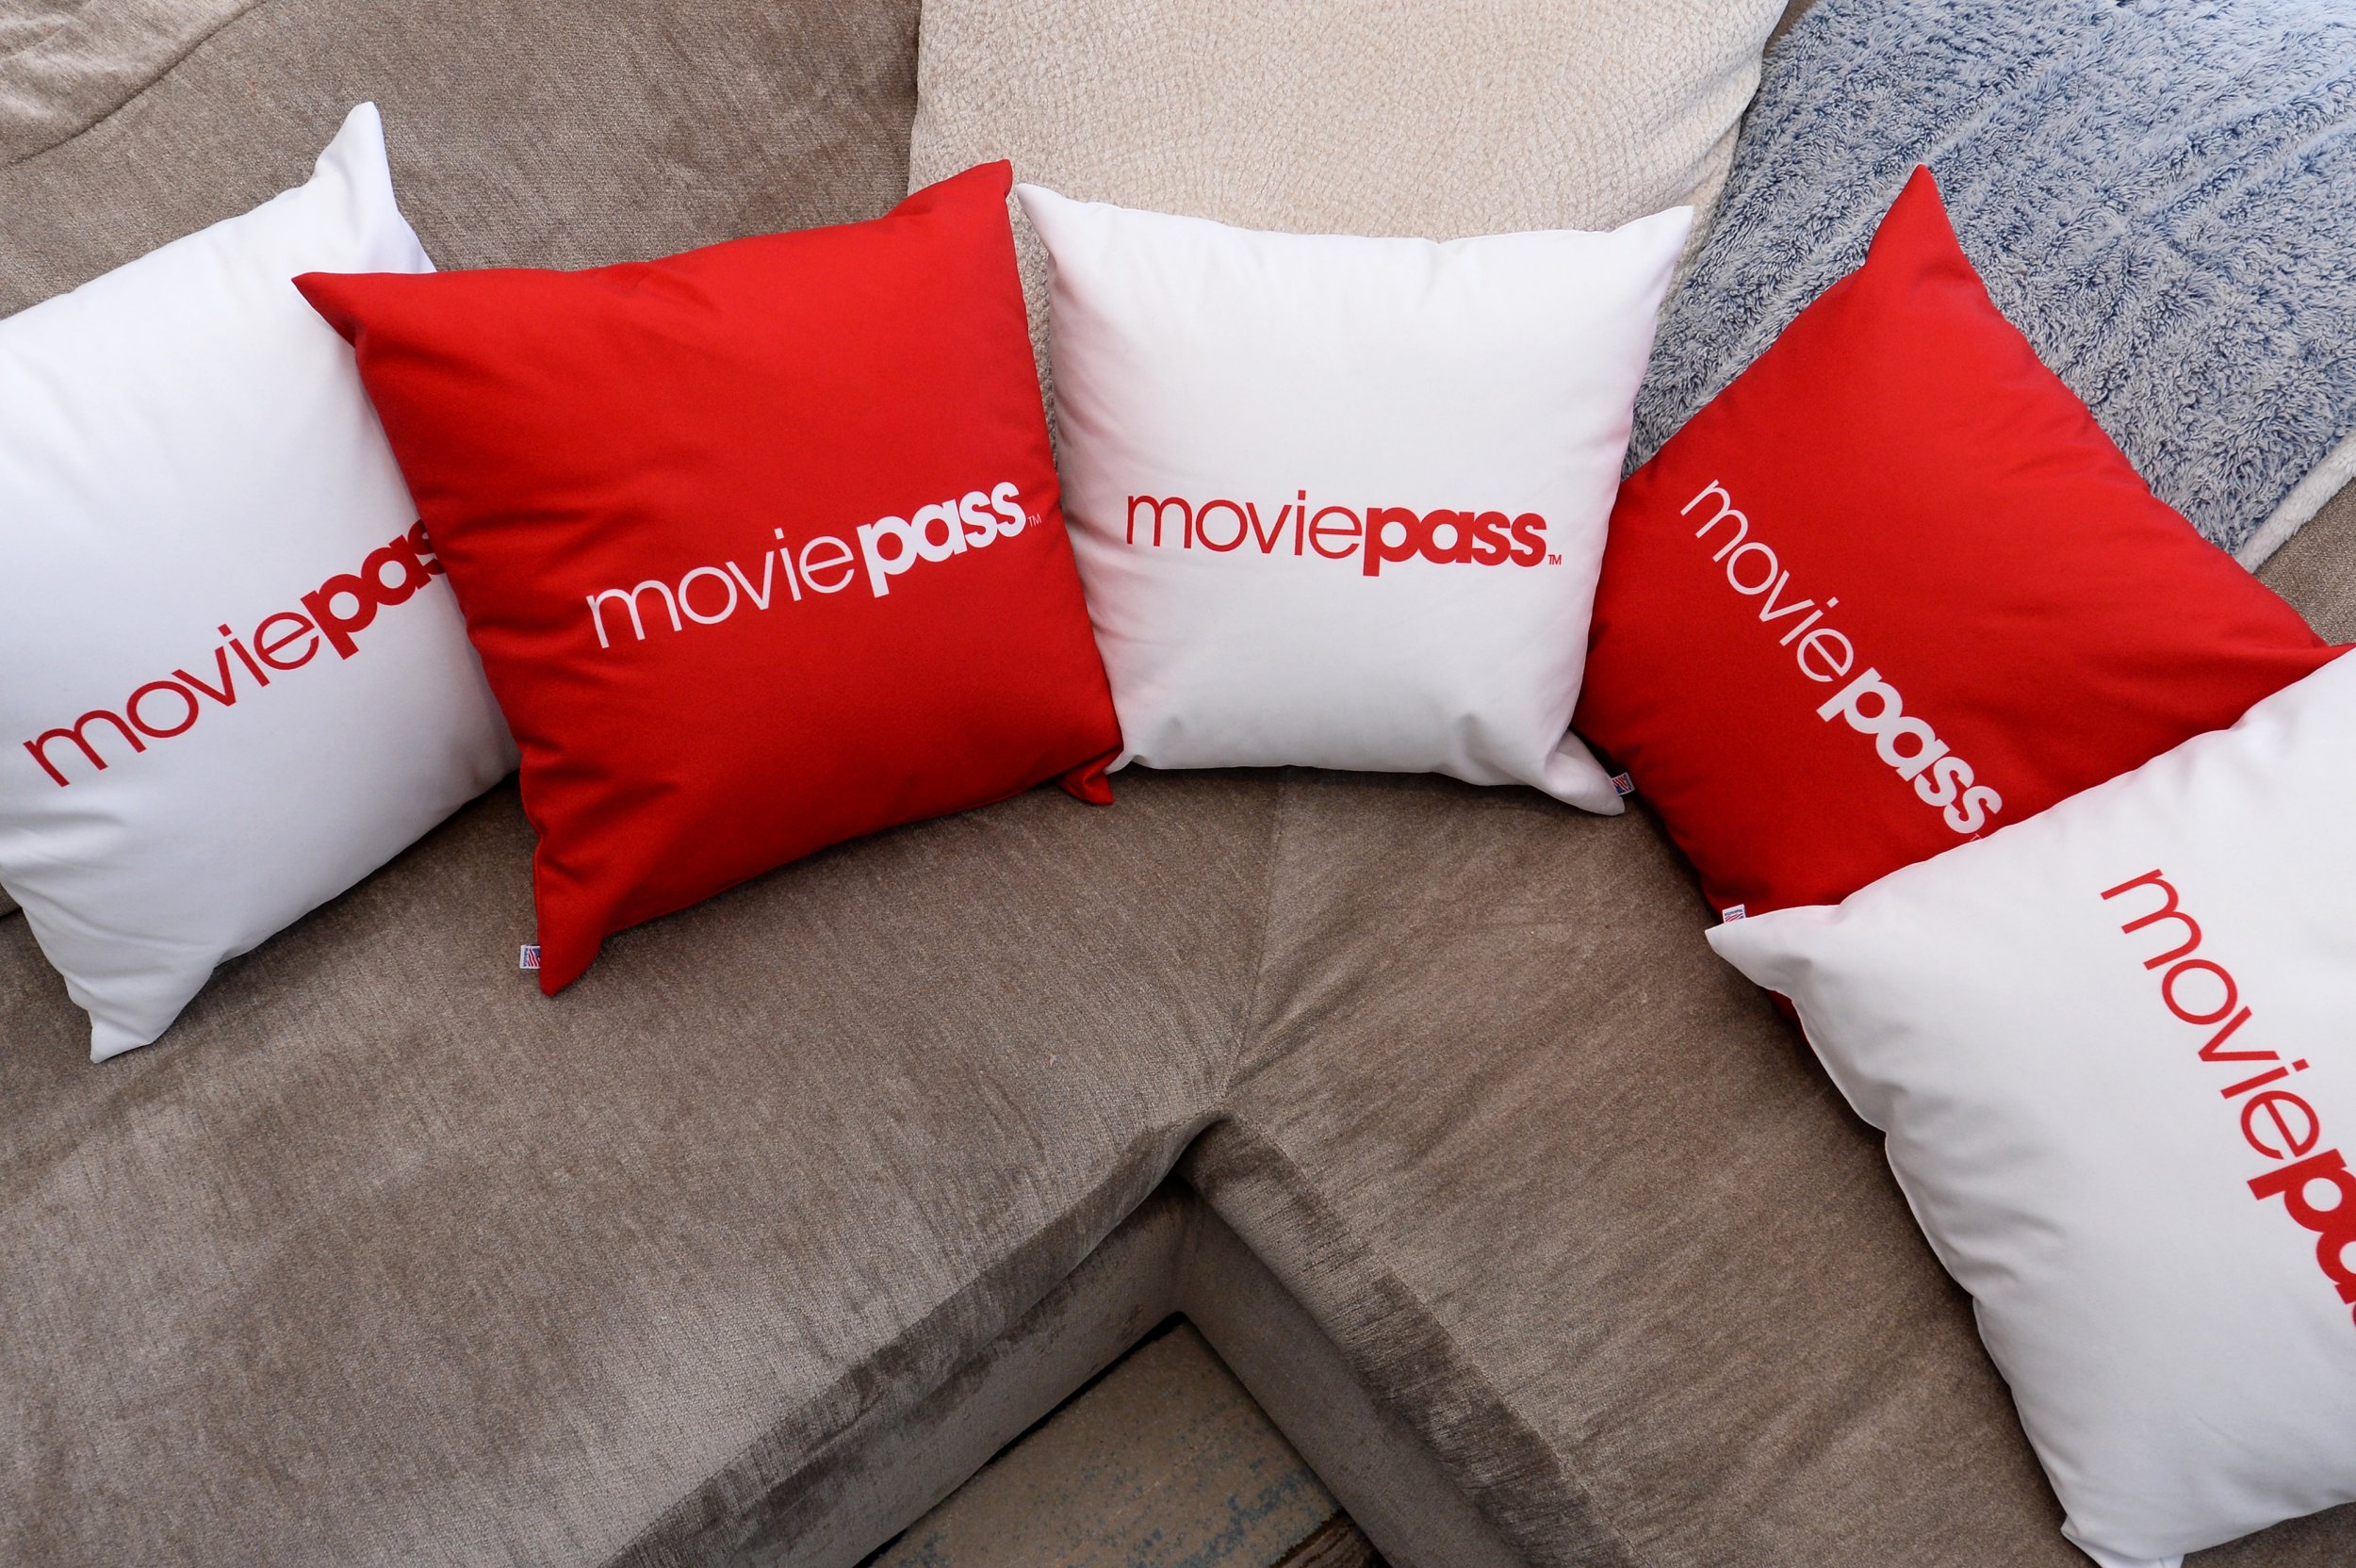 movie pass logo on pillows